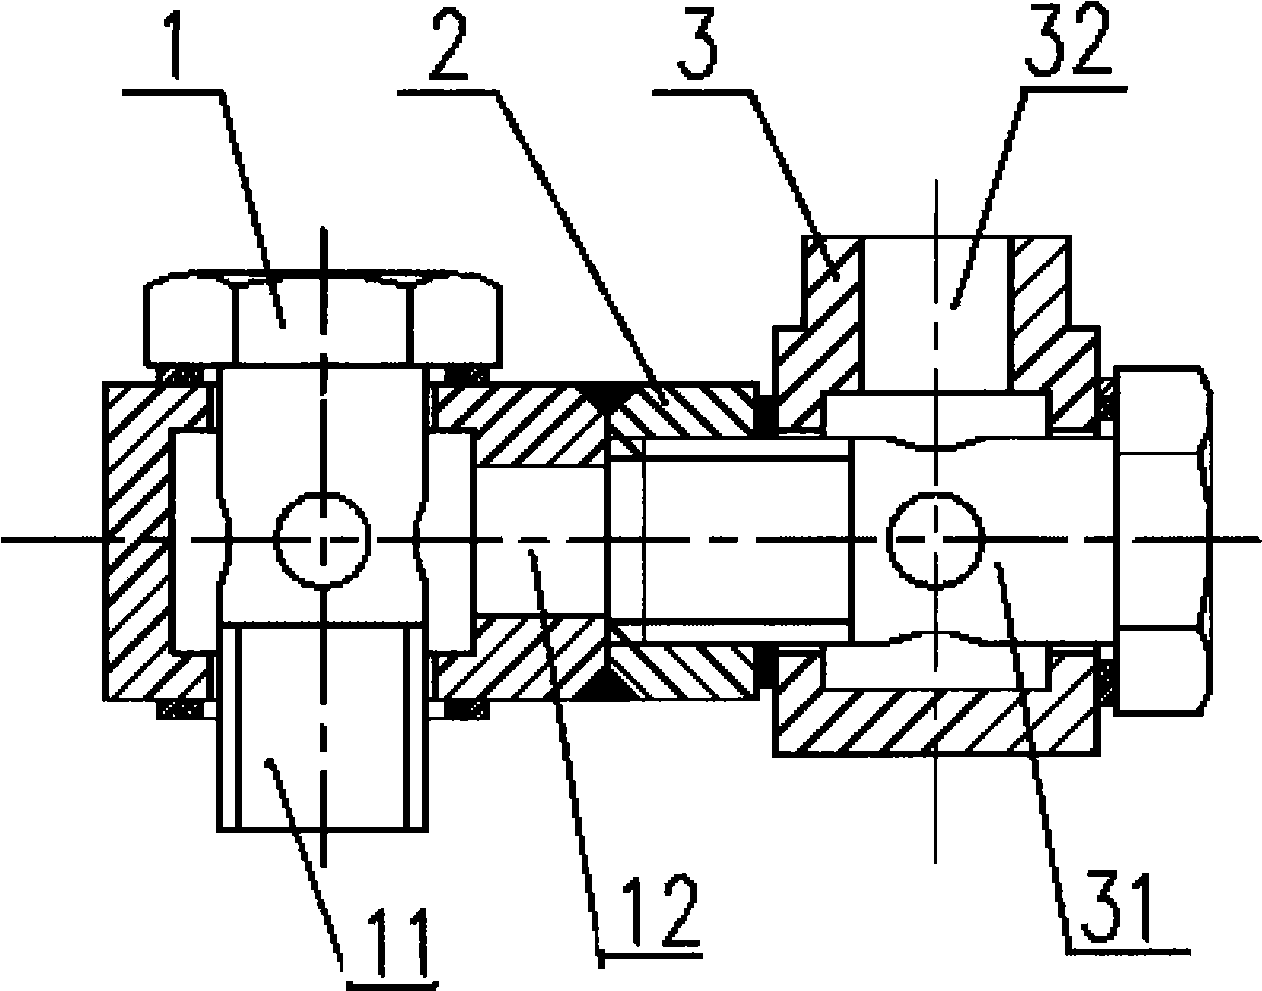 Design of universal hydraulic coupling